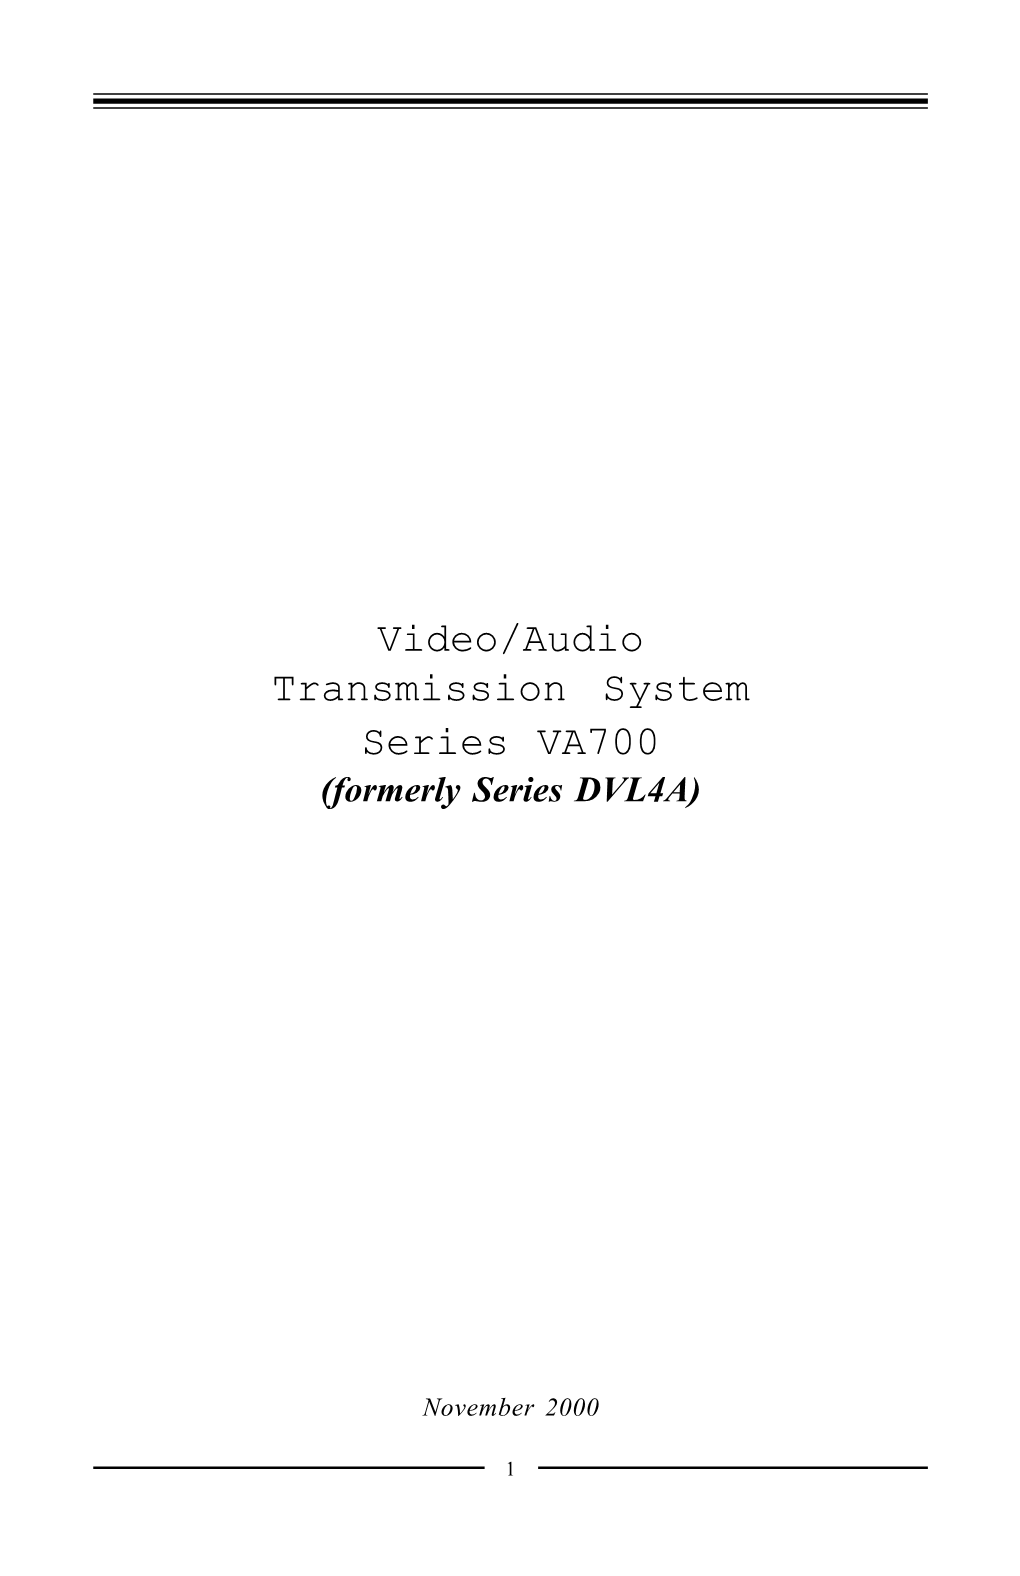 Video/Audio Transmission System Series VA700 (Formerly Series DVL4A)